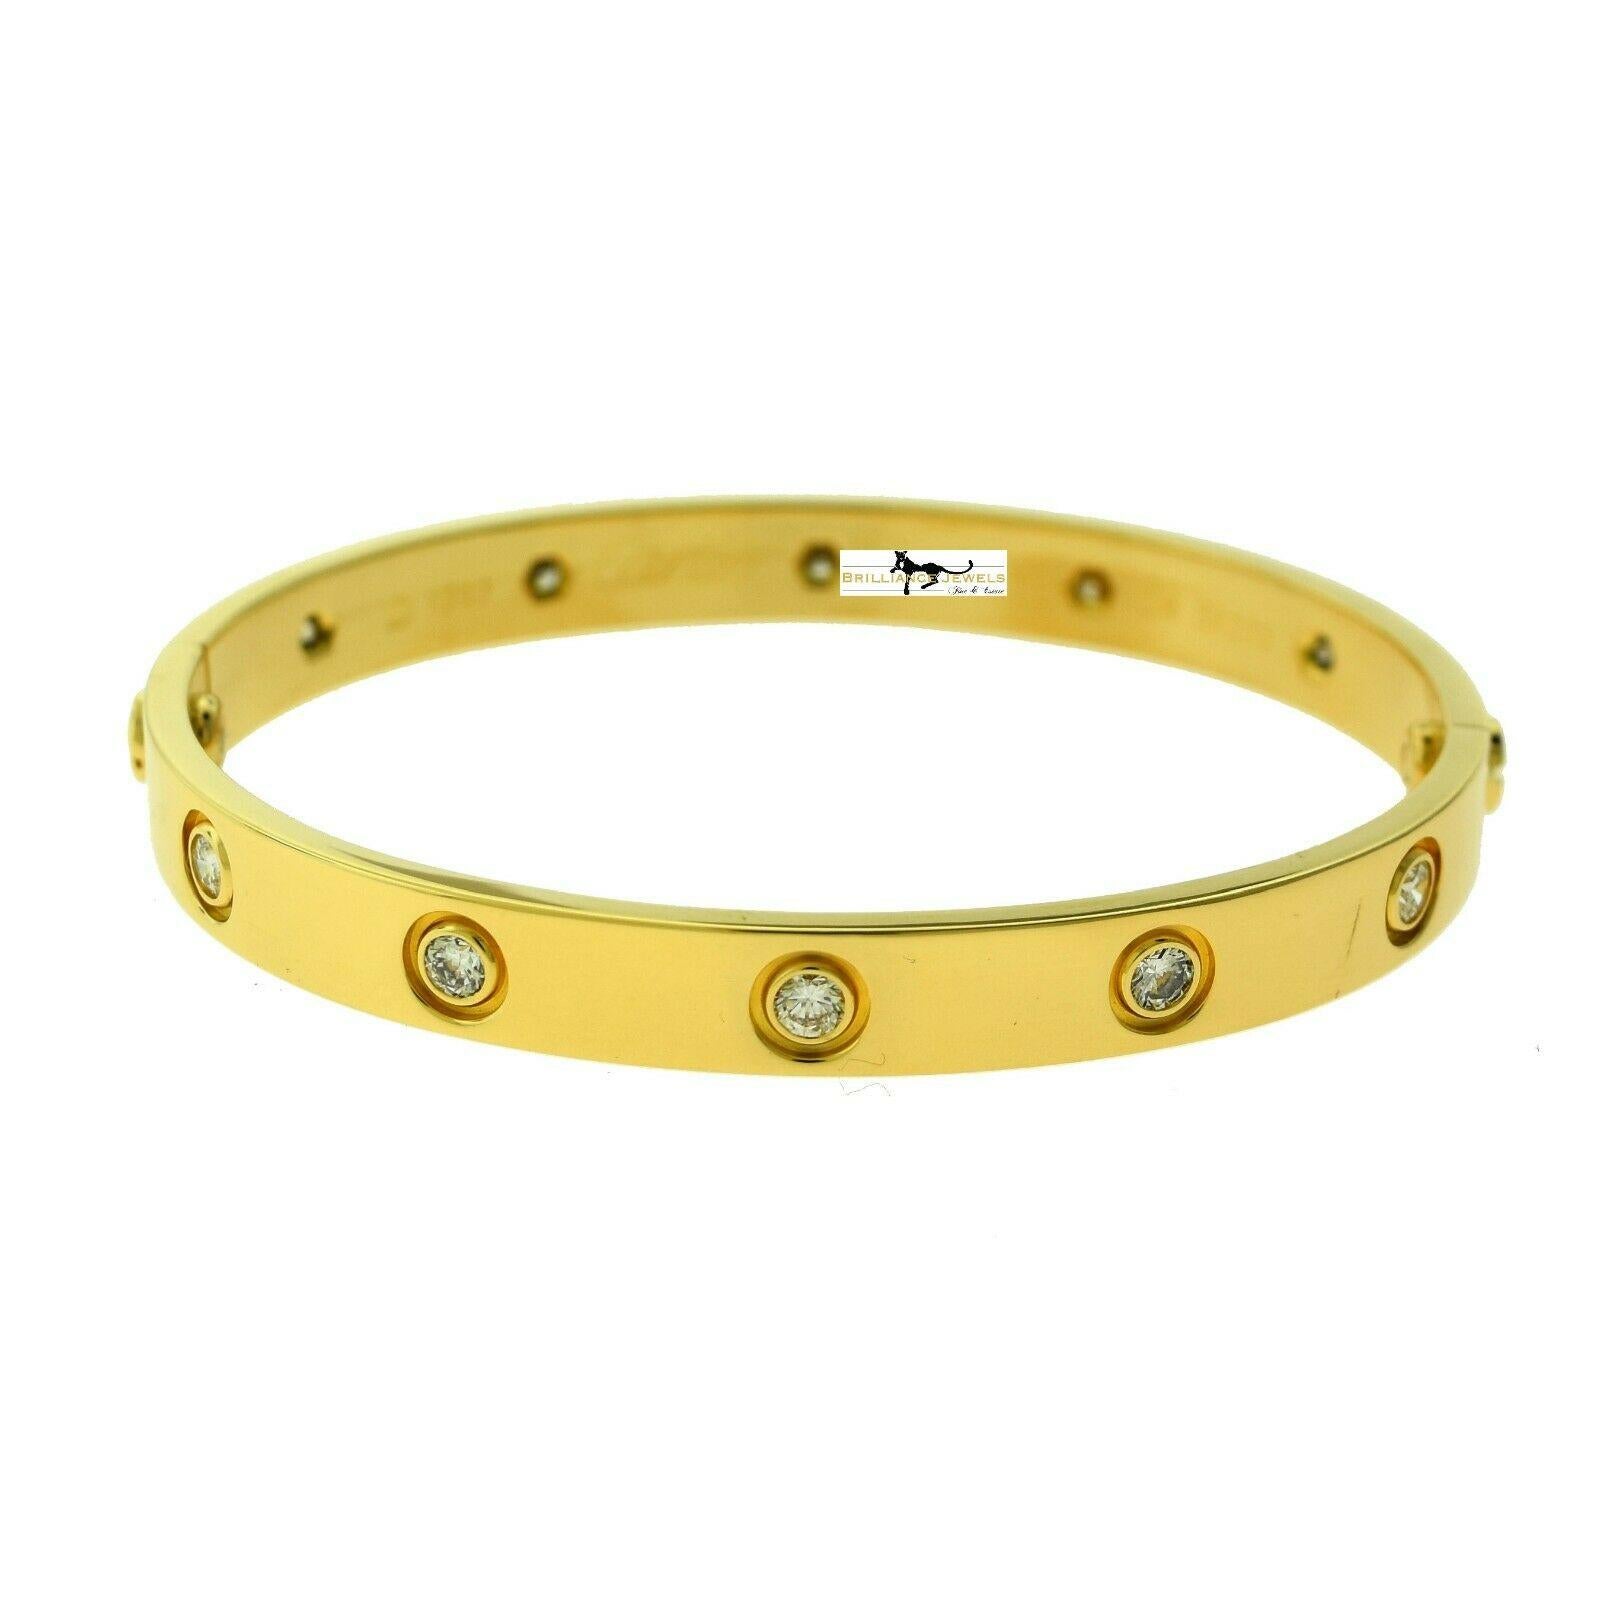 Designer: Cartier

Collection: Love

Style: Bangle Bracelet

Metal: Yellow Gold

Metal Purity: 18k

Bracelet Size: 16 = 16 cm

Stones: 10 Round Brilliant Cut Diamonds

Hallmarks: 16, Au750 Cartier, Serial No.,

Screw System: 